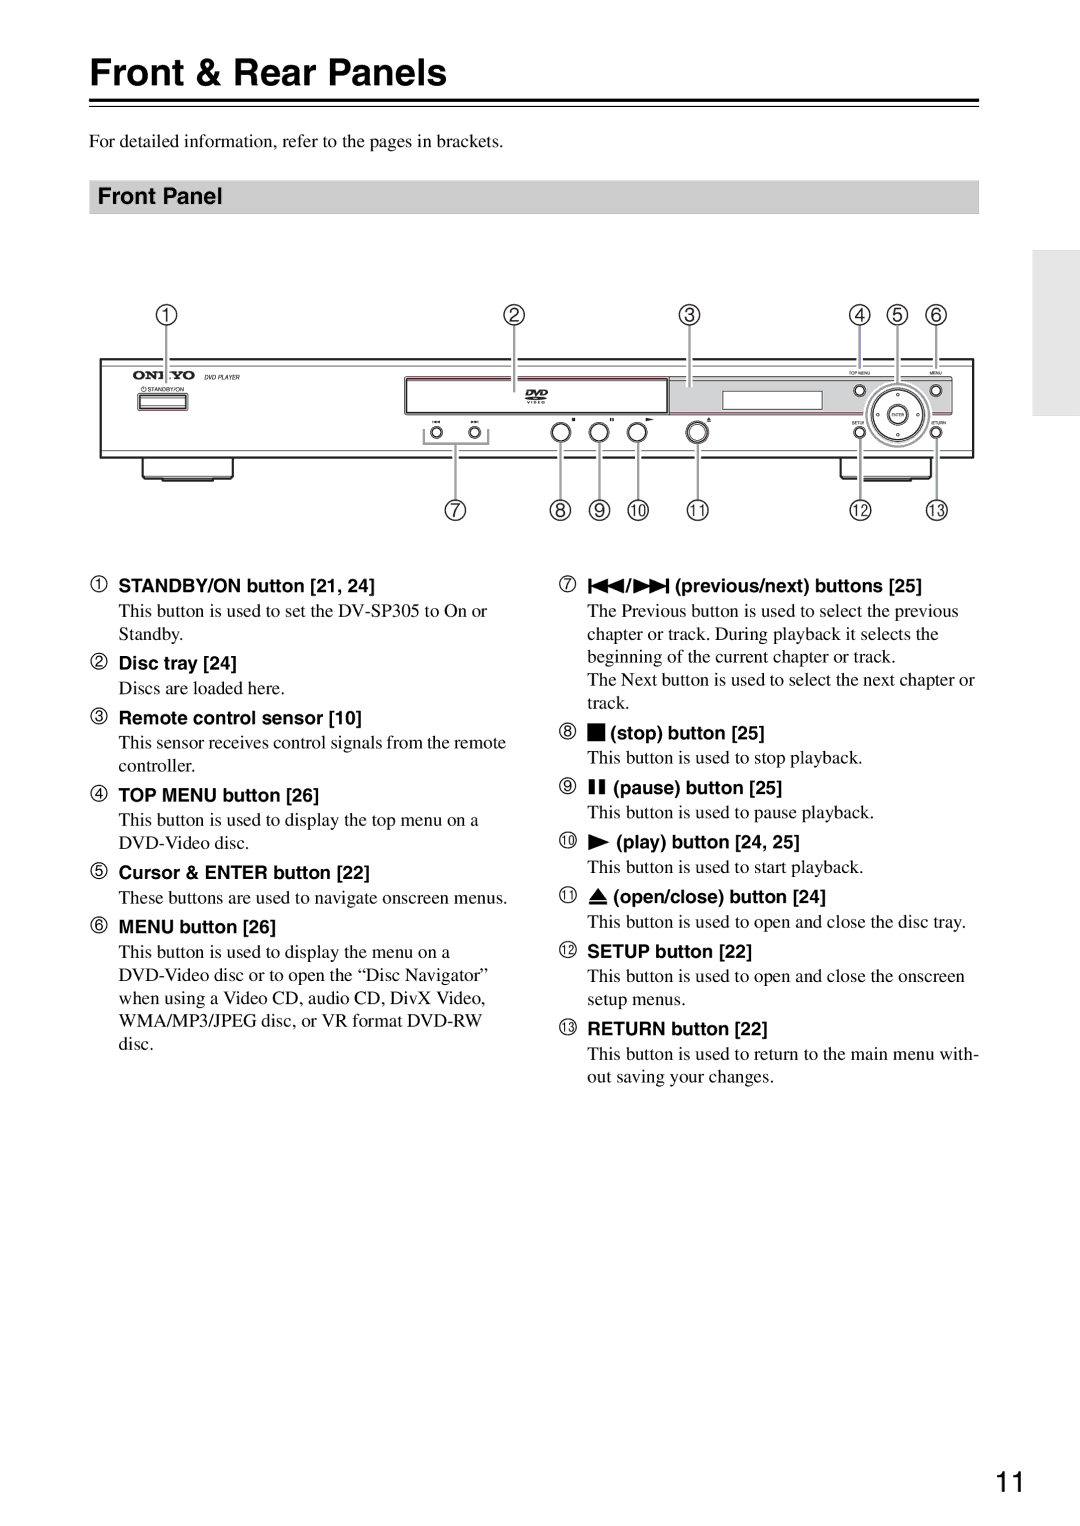 Onkyo DV-SP305 instruction manual Front & Rear Panels, Front Panel 